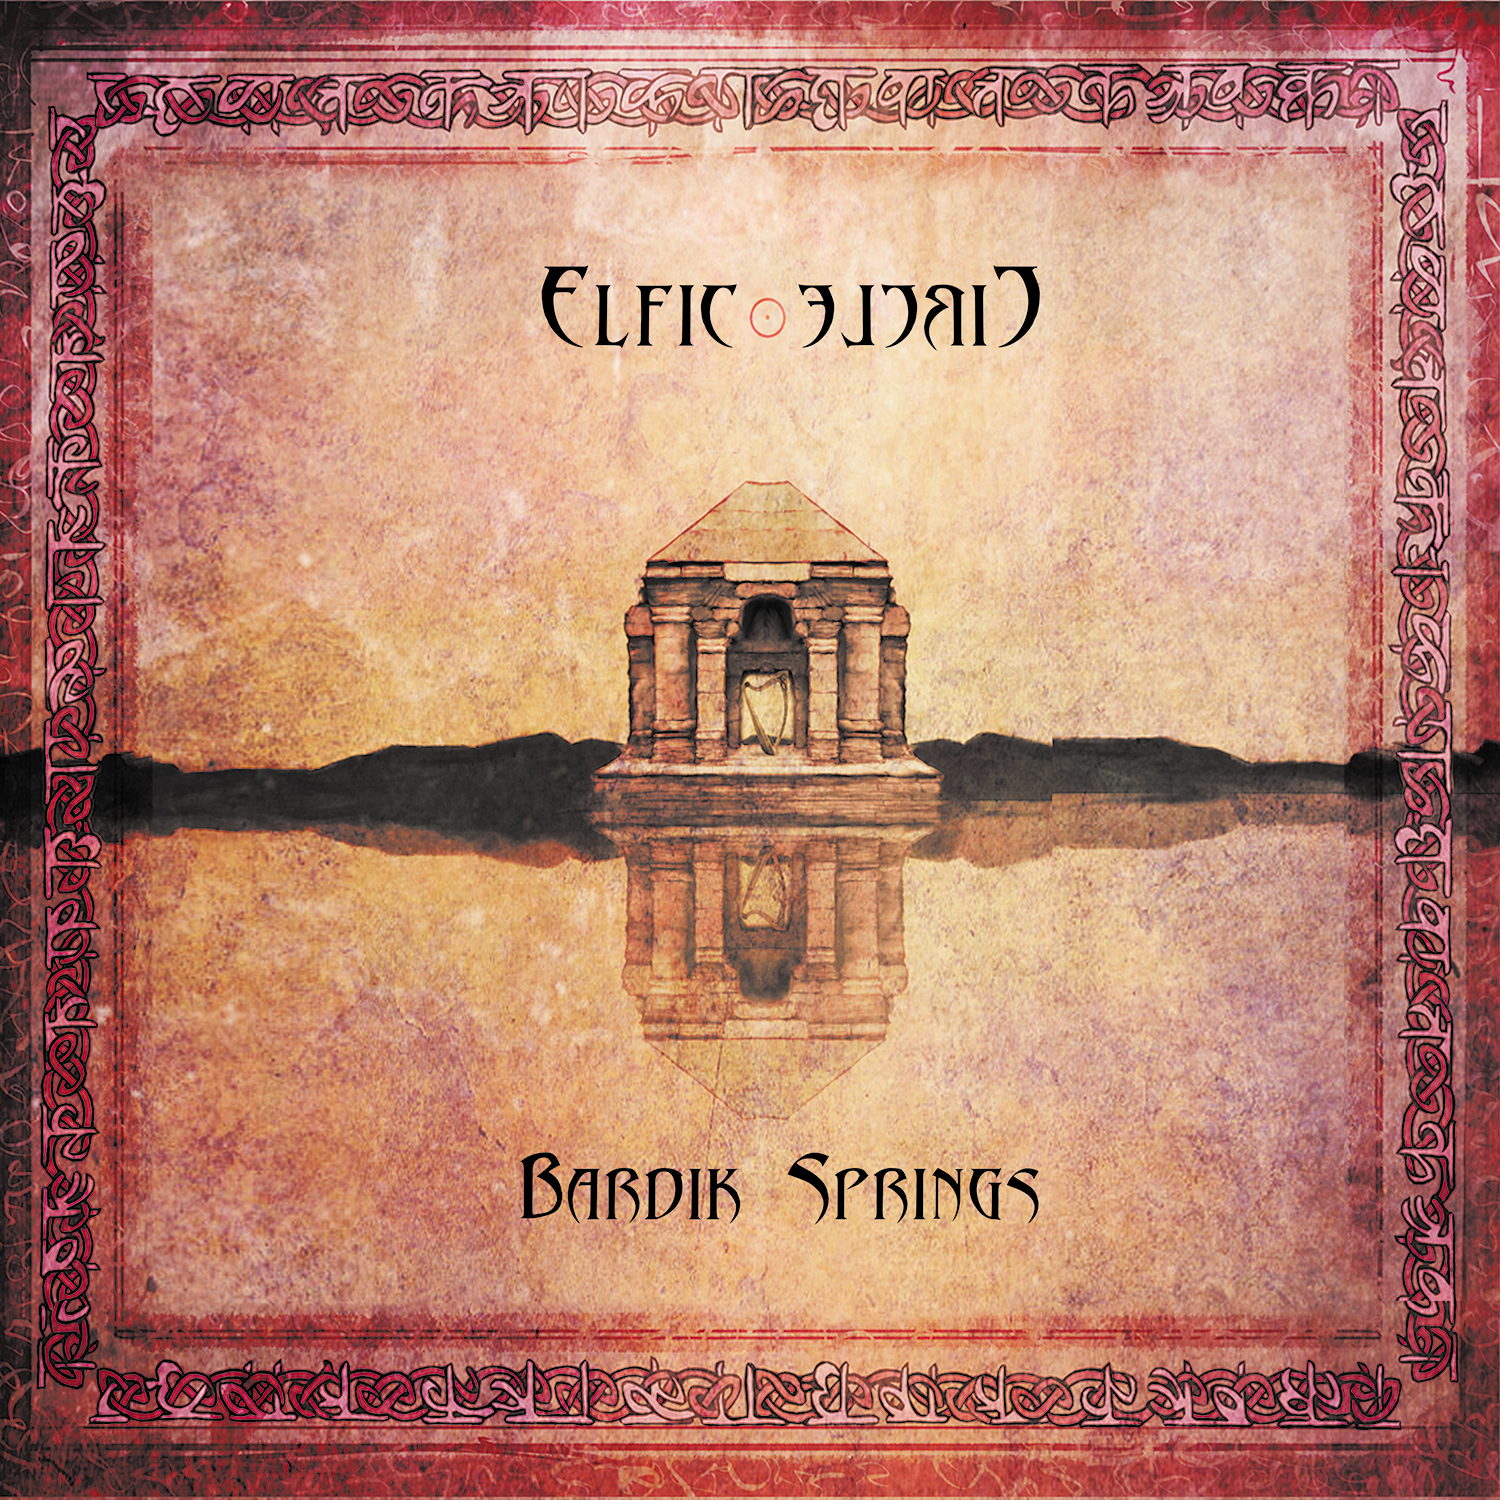 [Distribution] Elfic Circle – Bardik Springs Out Now